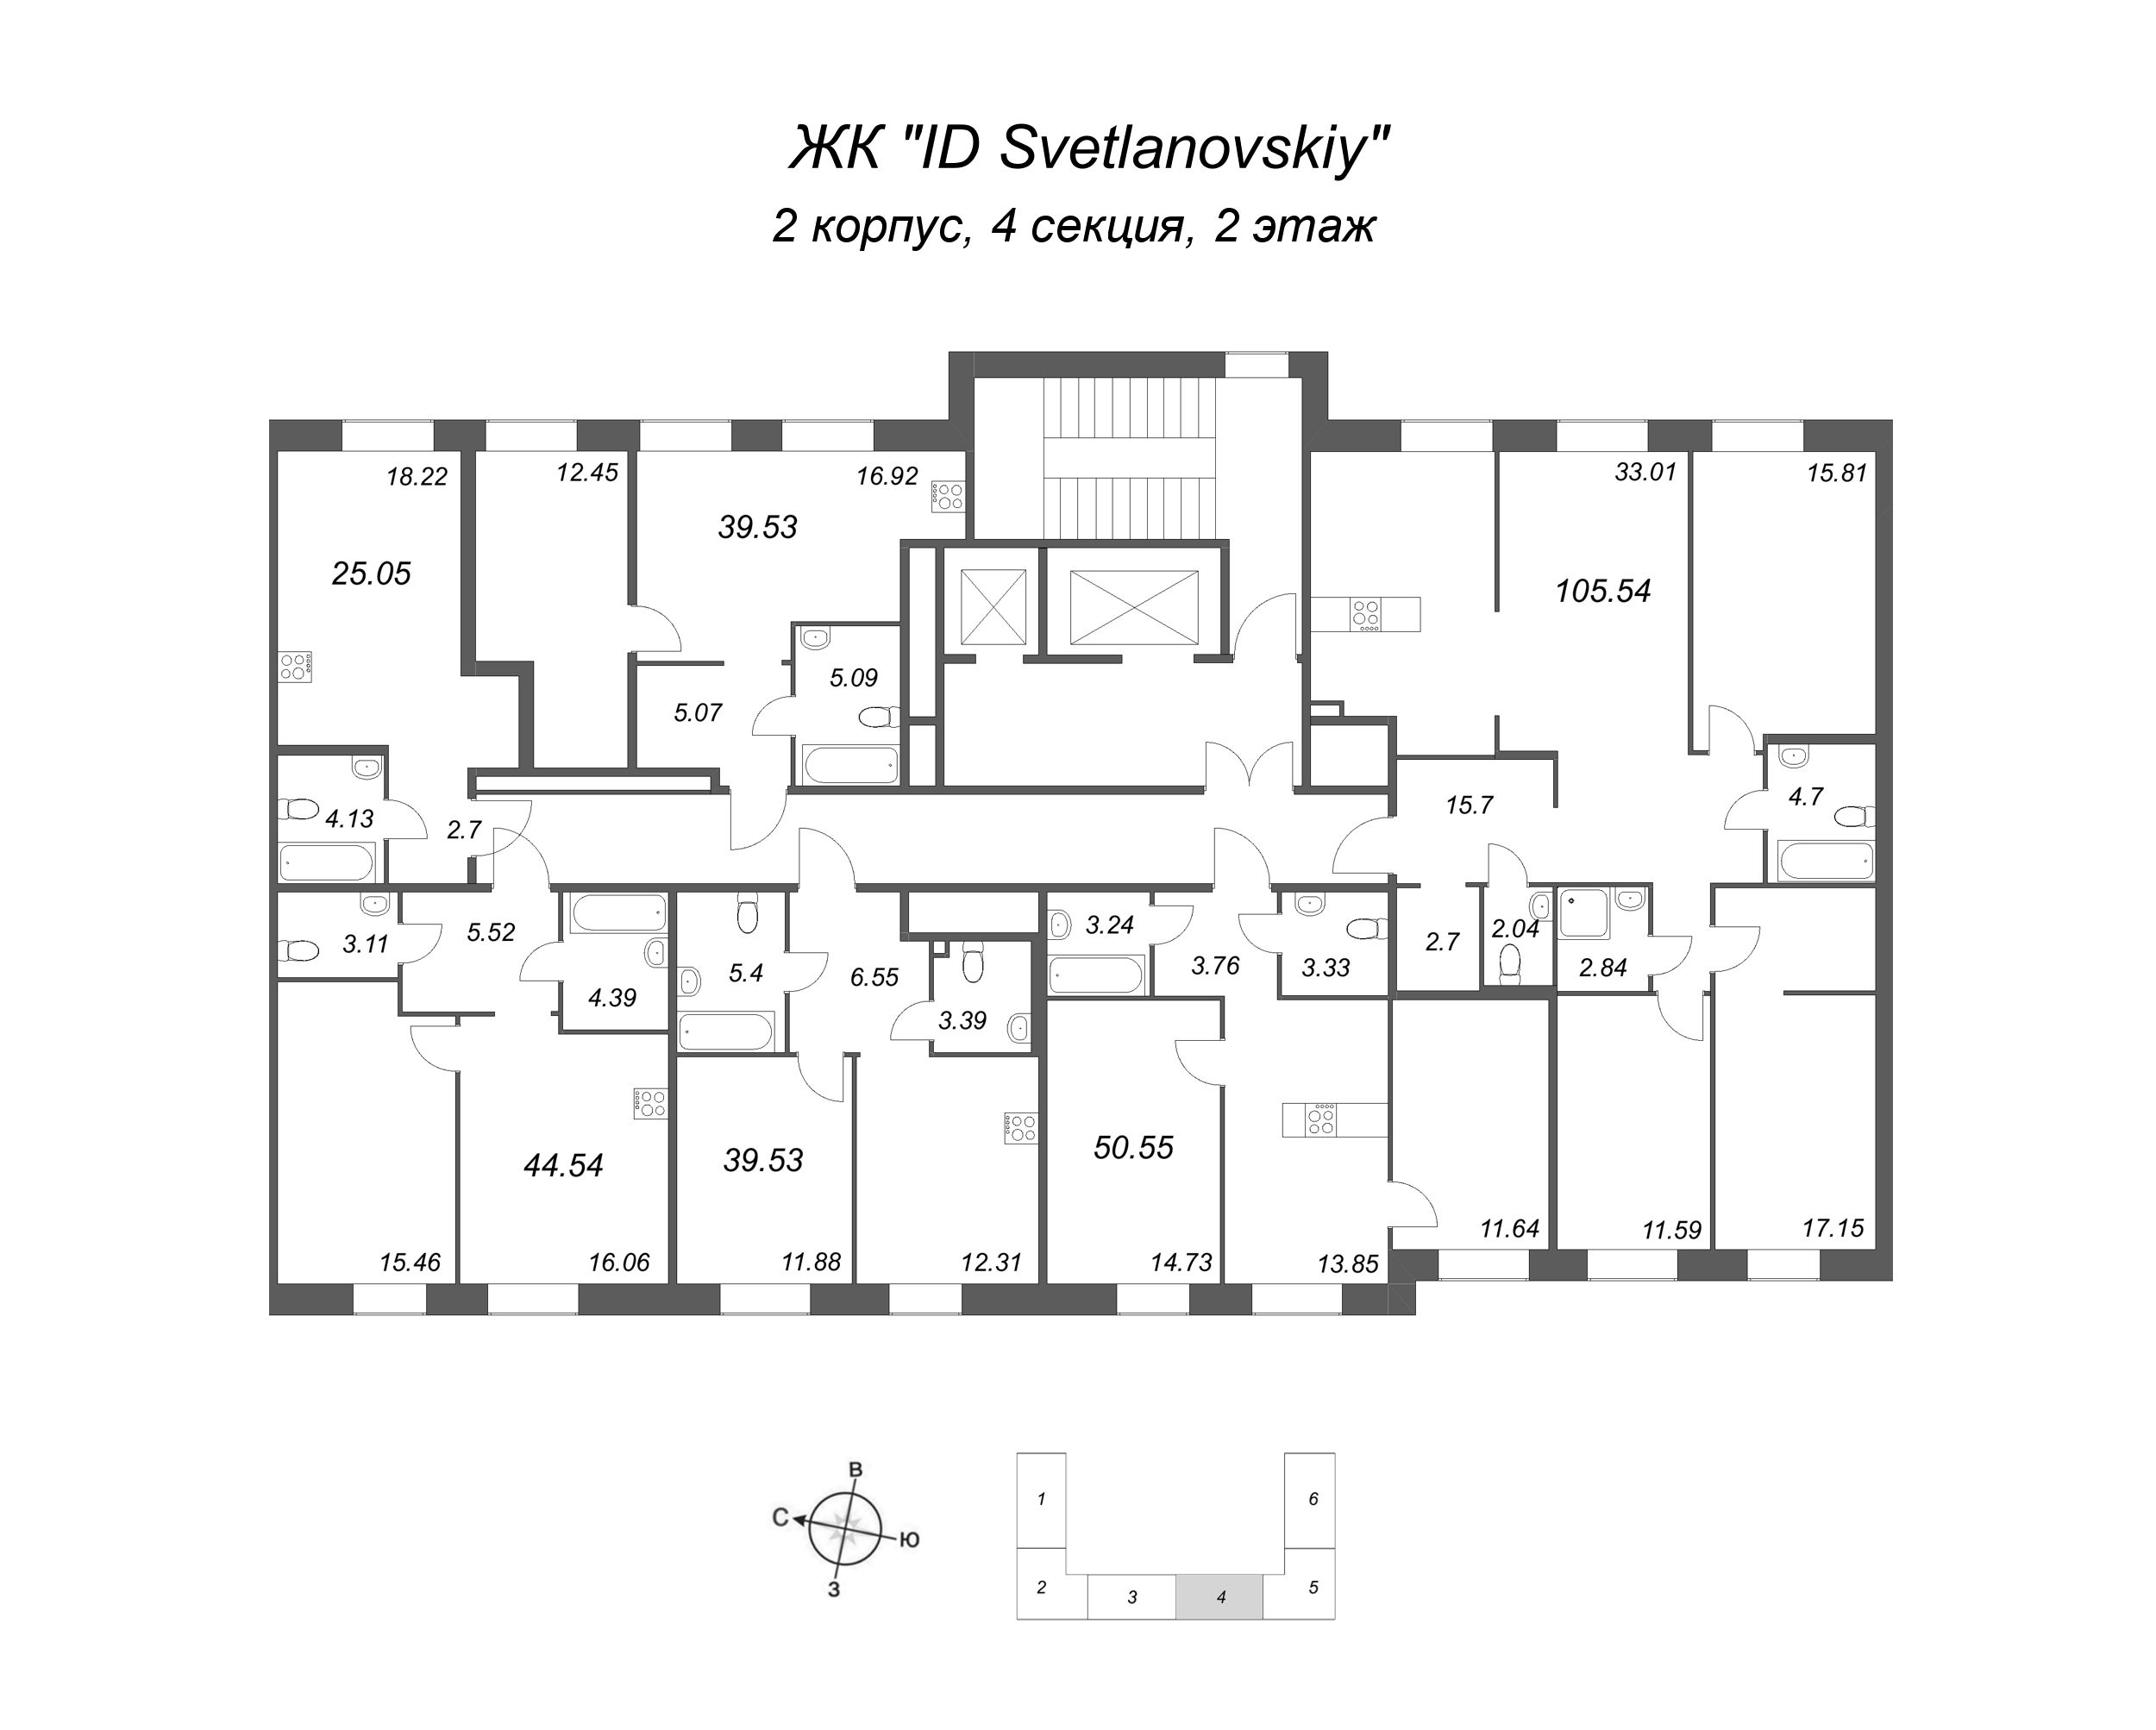 2-комнатная (Евро) квартира, 44.54 м² - планировка этажа